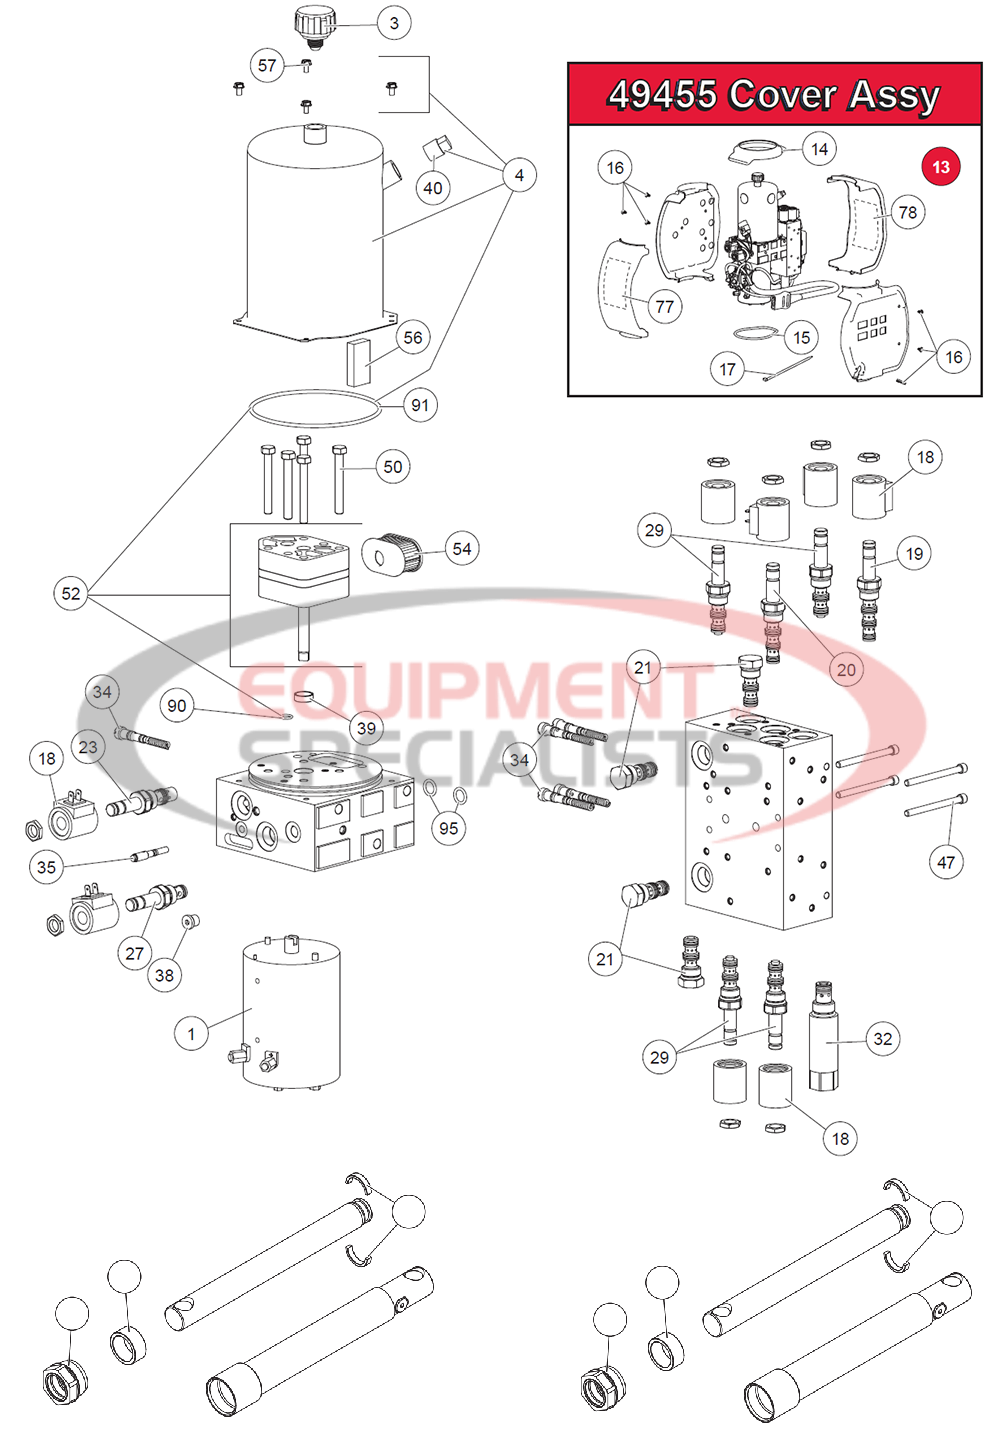 Western Hydraulic Ultramount Wideout Hydraulic Power Unit Breakdown Diagram